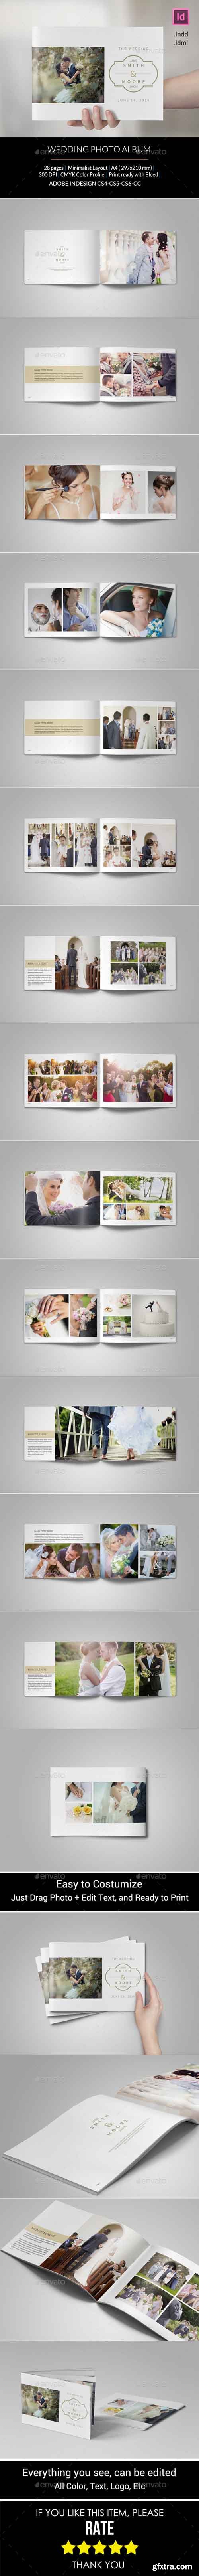 GR - Simple Wedding Photo Album 11070772